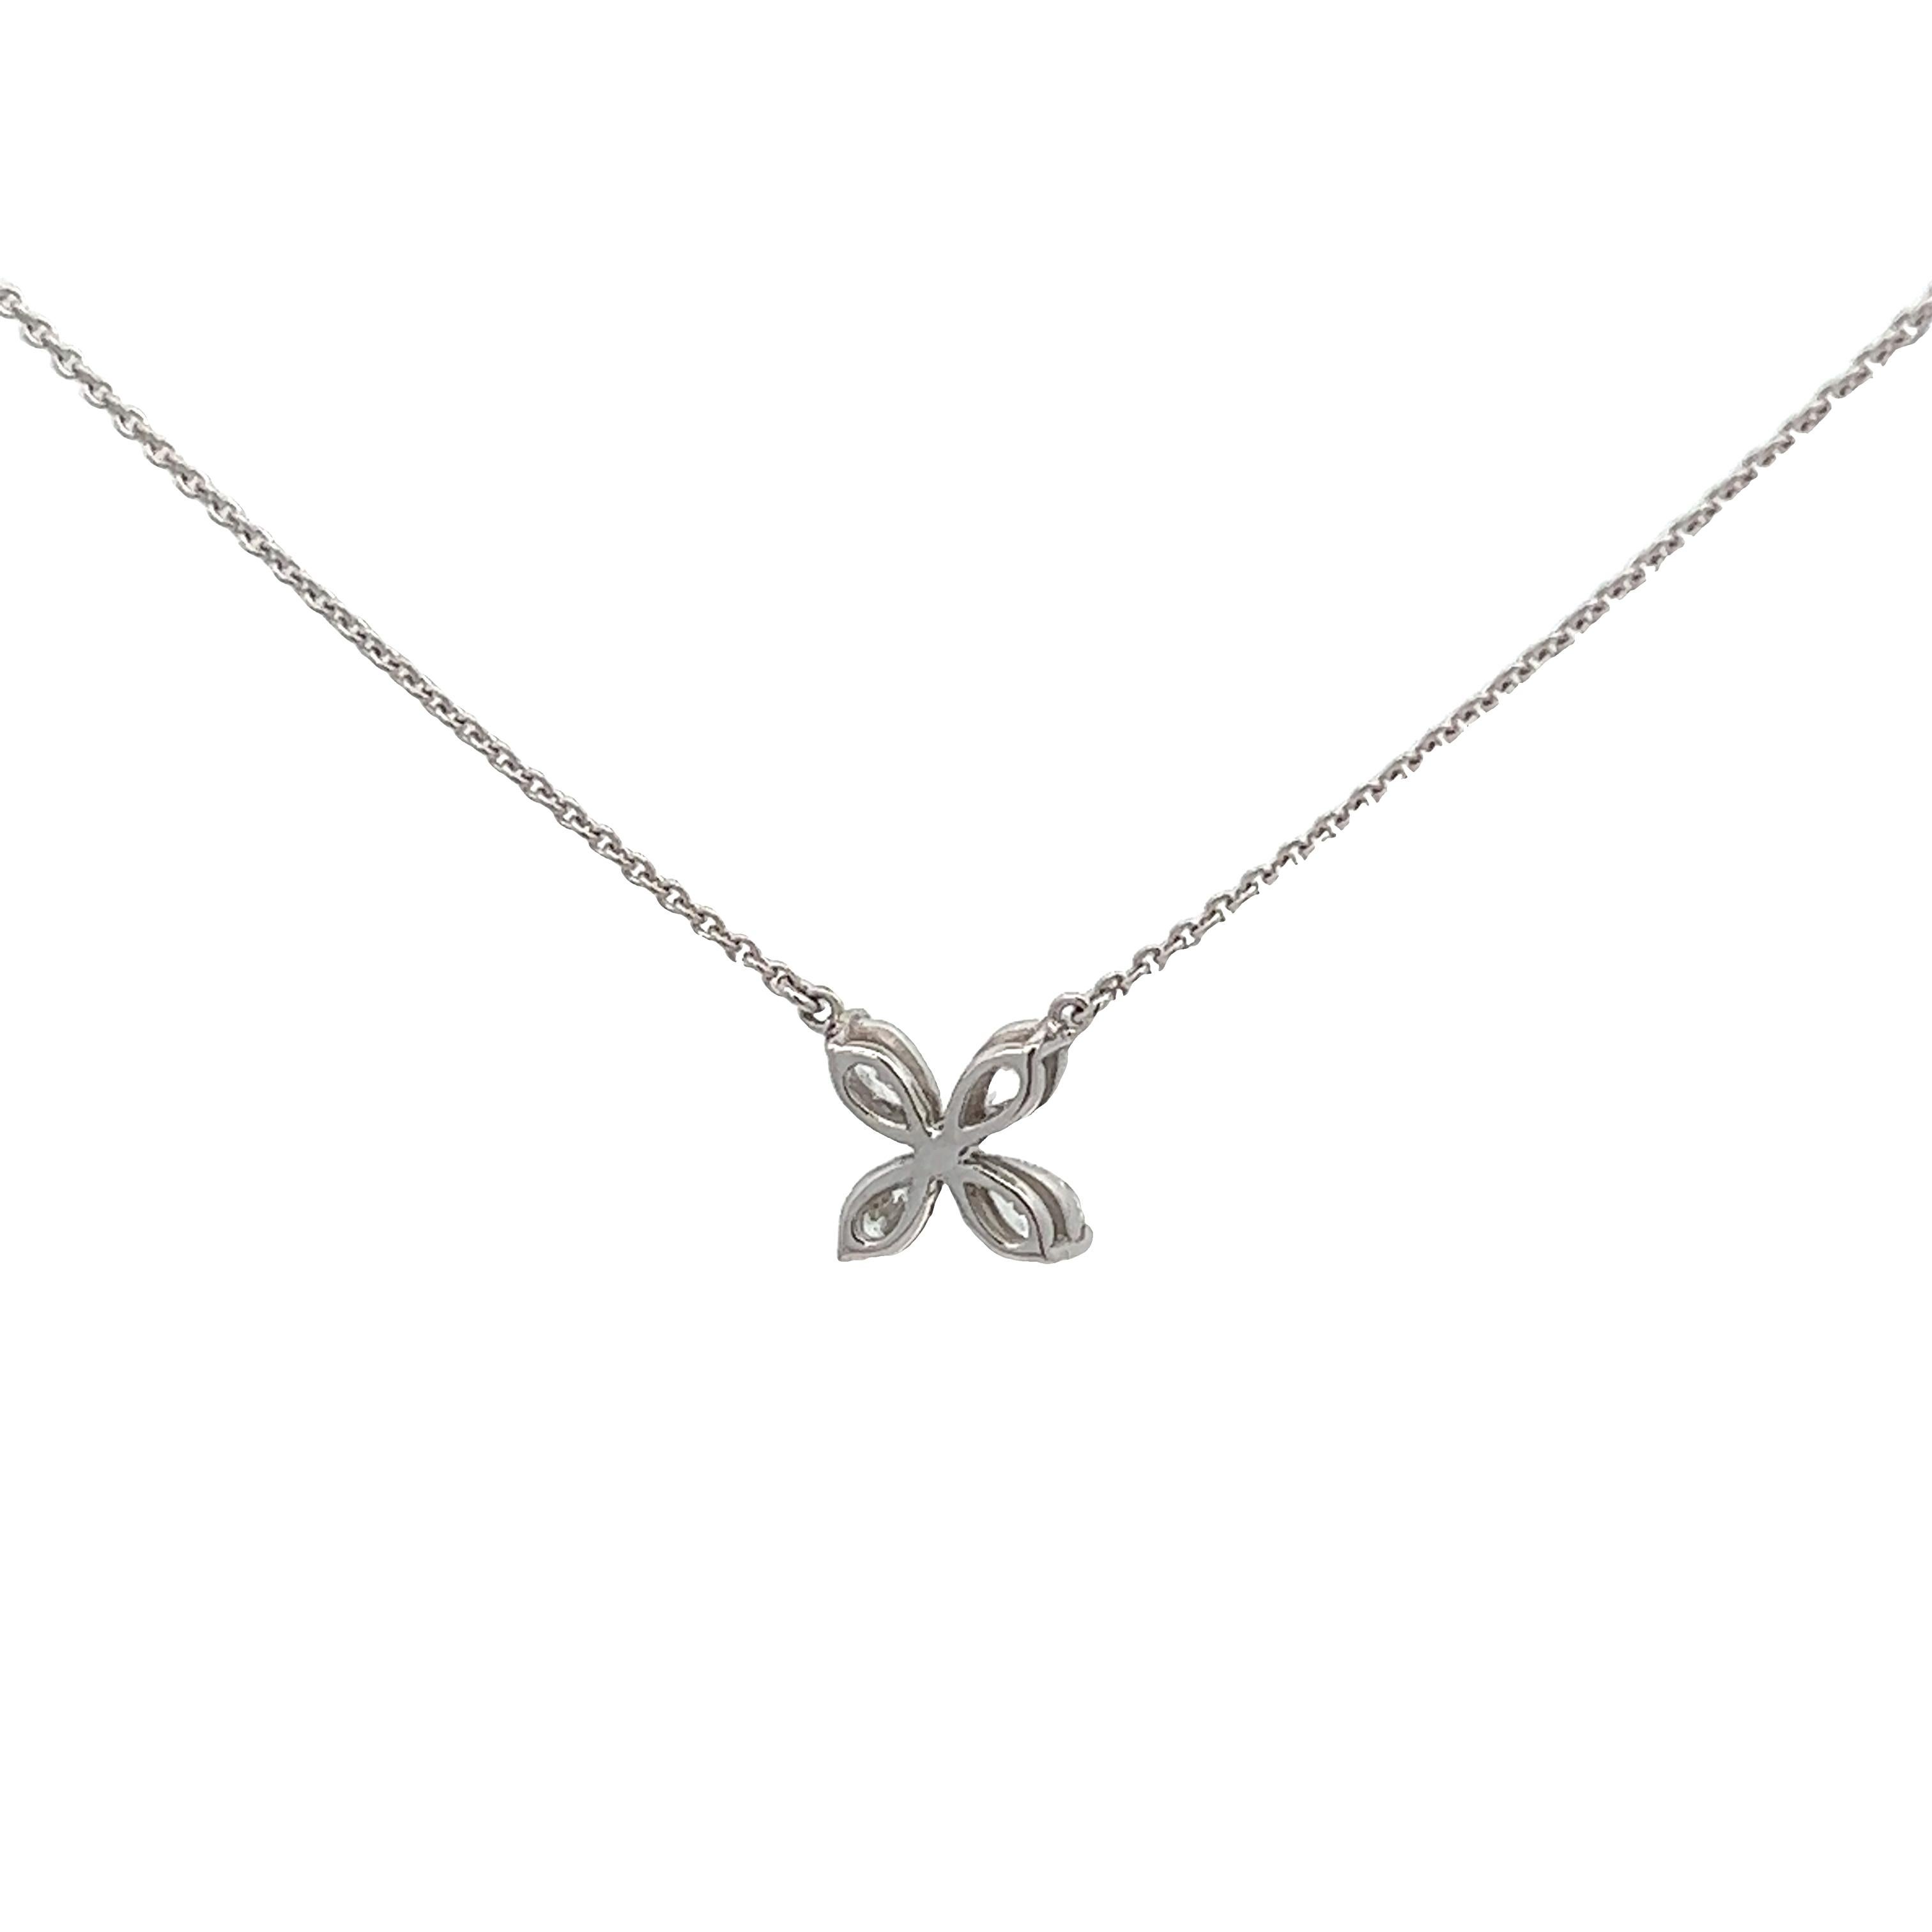 Aesthetic Movement 0.65 Carat Flower Shape Diamond Pendant Necklace in 18K White Gold For Sale